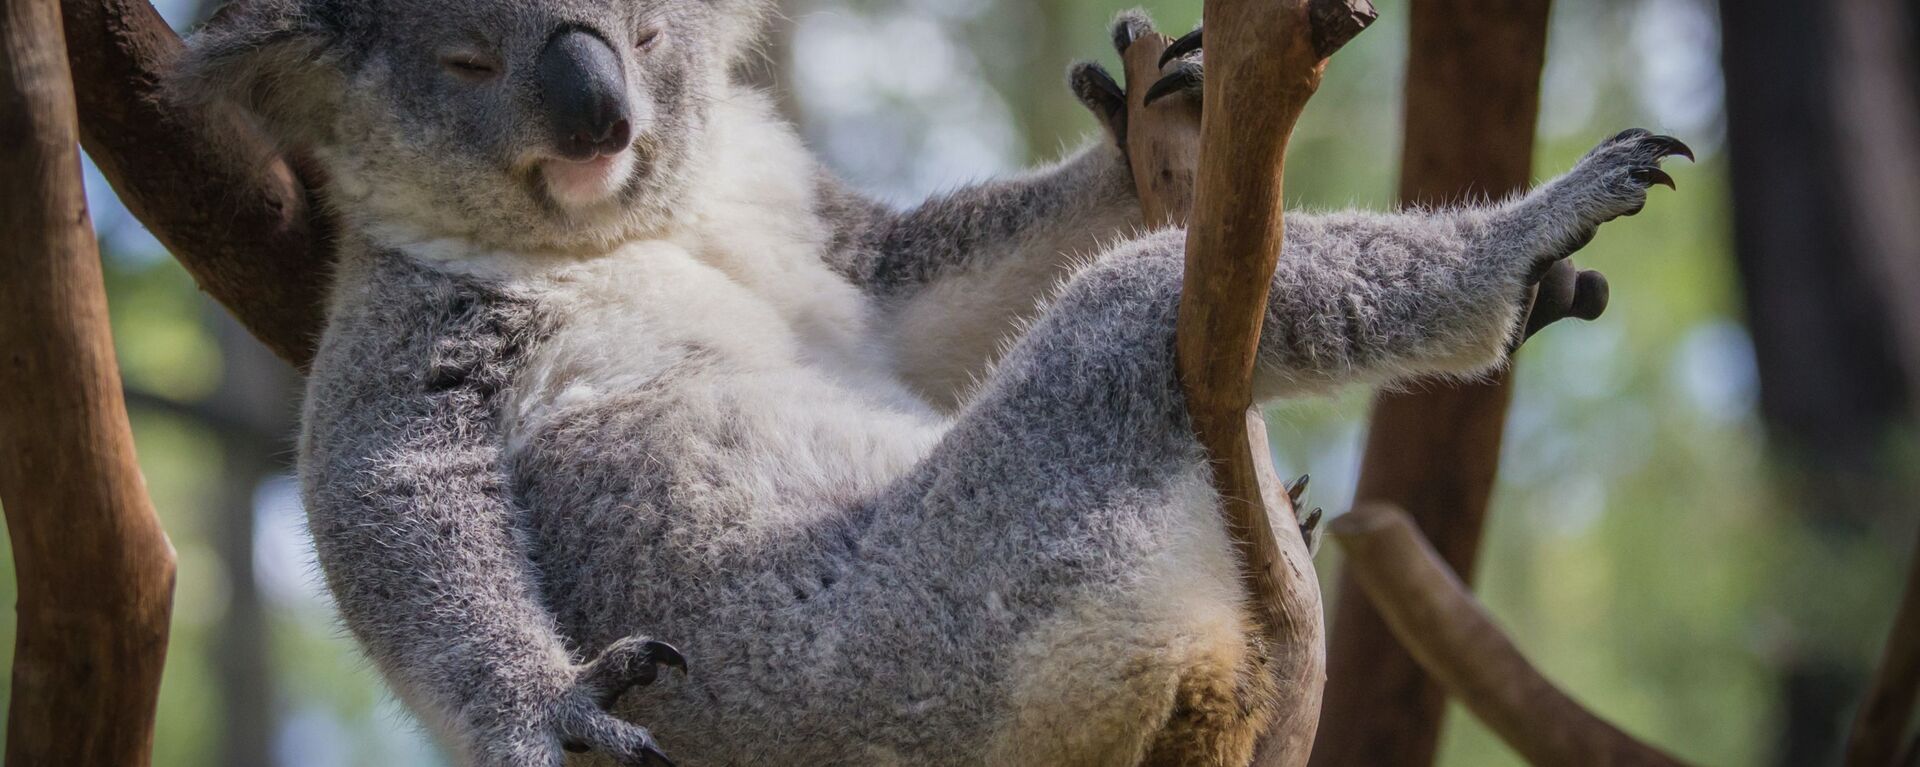 Los koalas pueden desaparecer - Sputnik Mundo, 1920, 23.09.2021